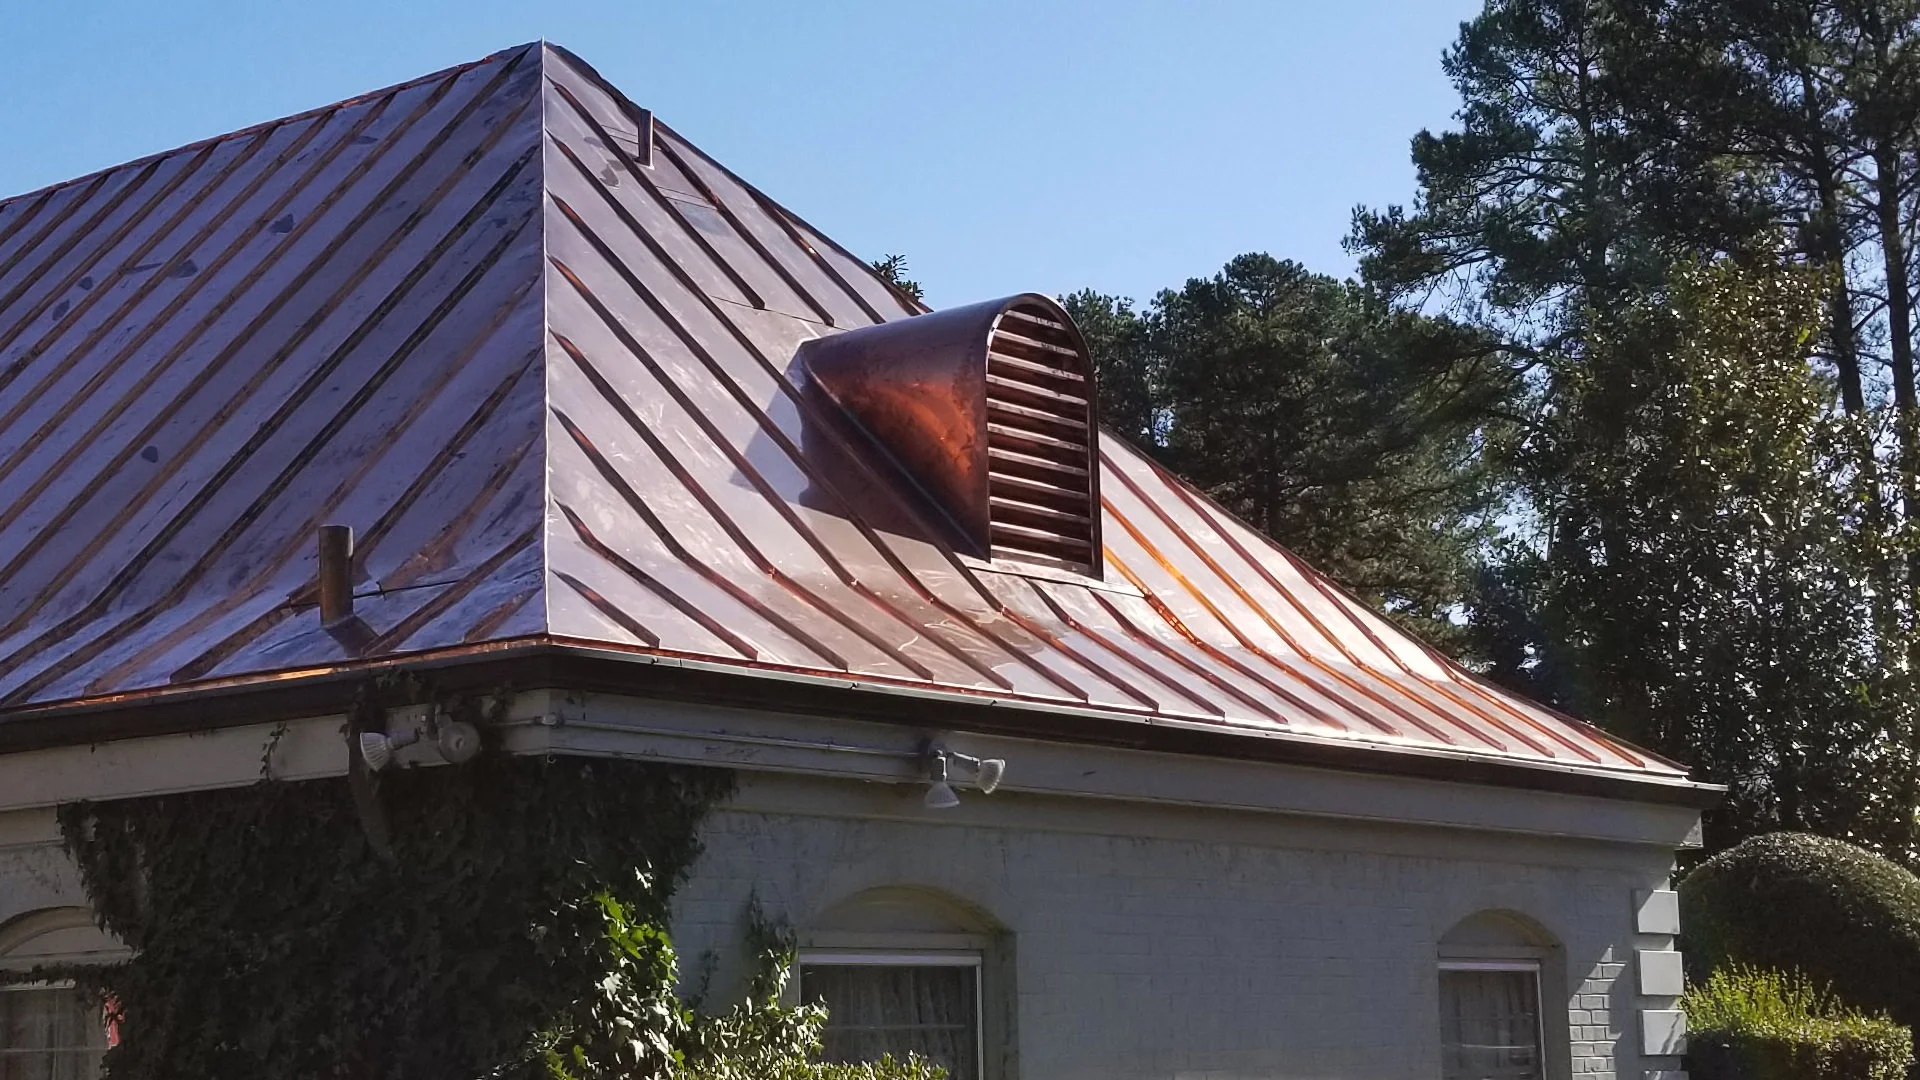 Custom made copper barrel dormer on metal roof